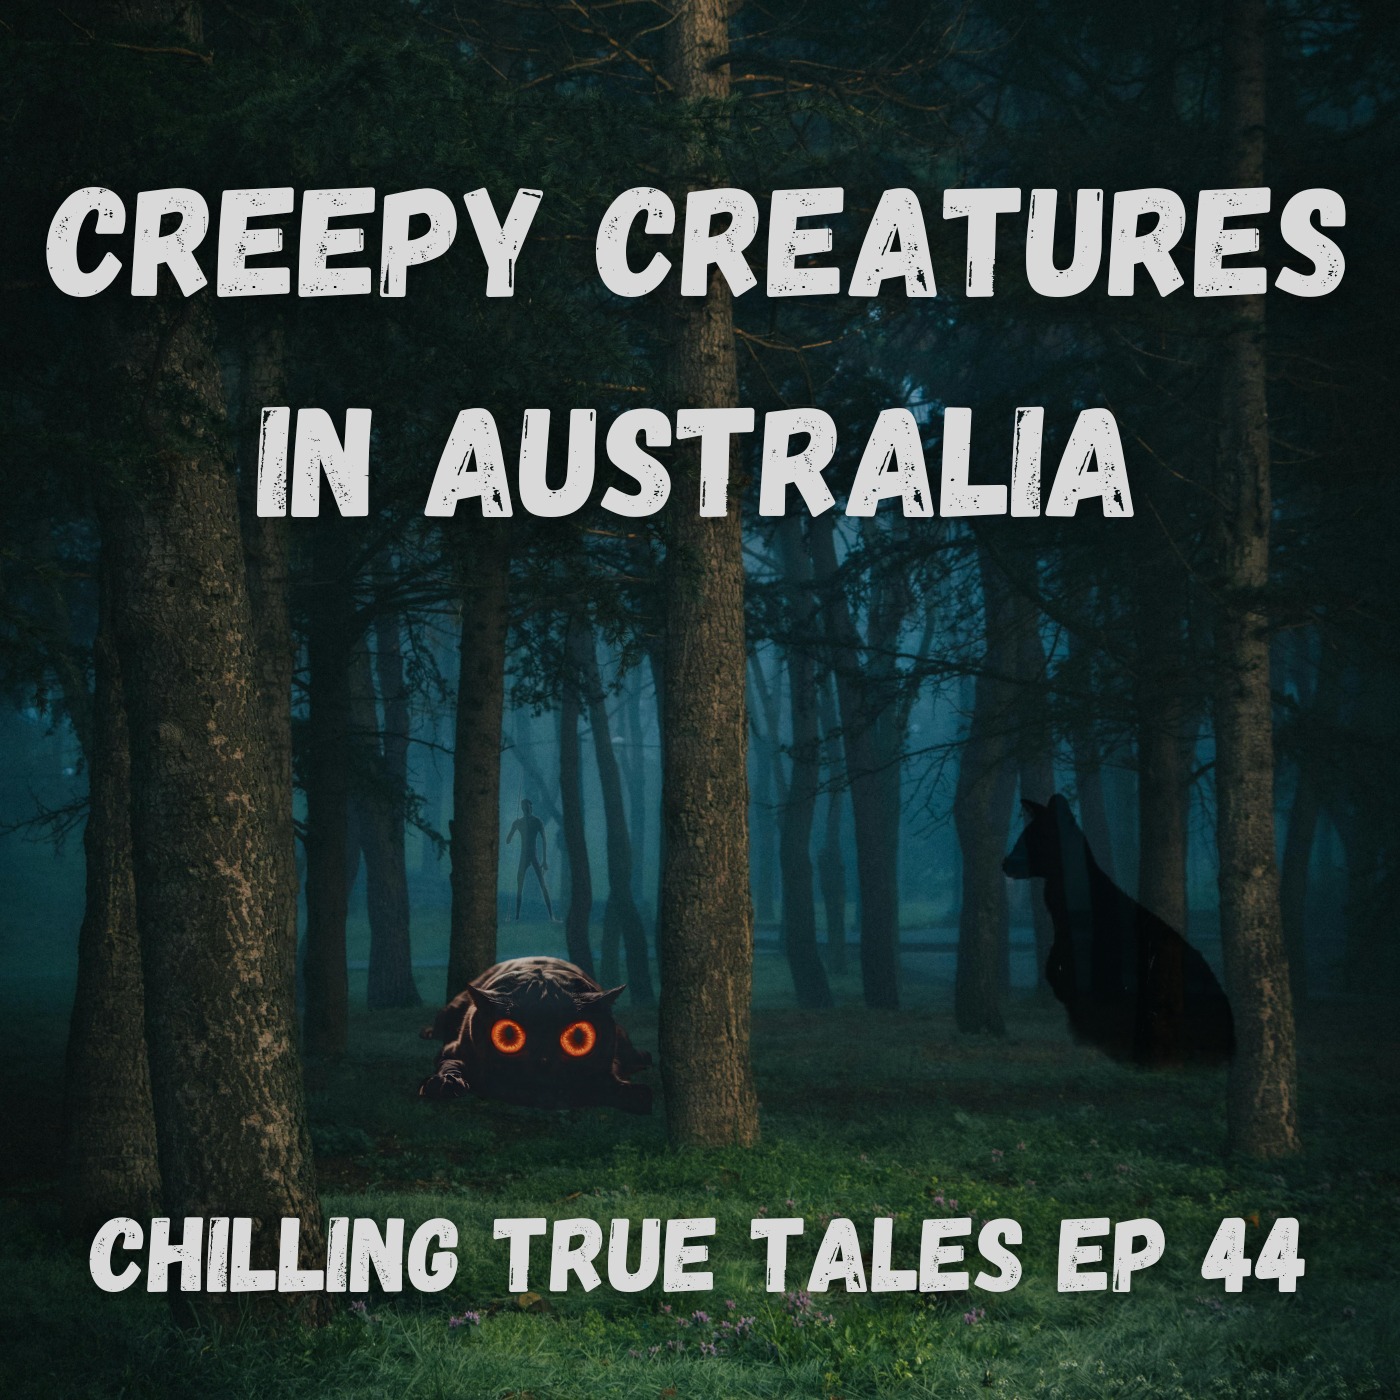 Chilling True Tales - Ep 44 - Creepy Creatures in Australia